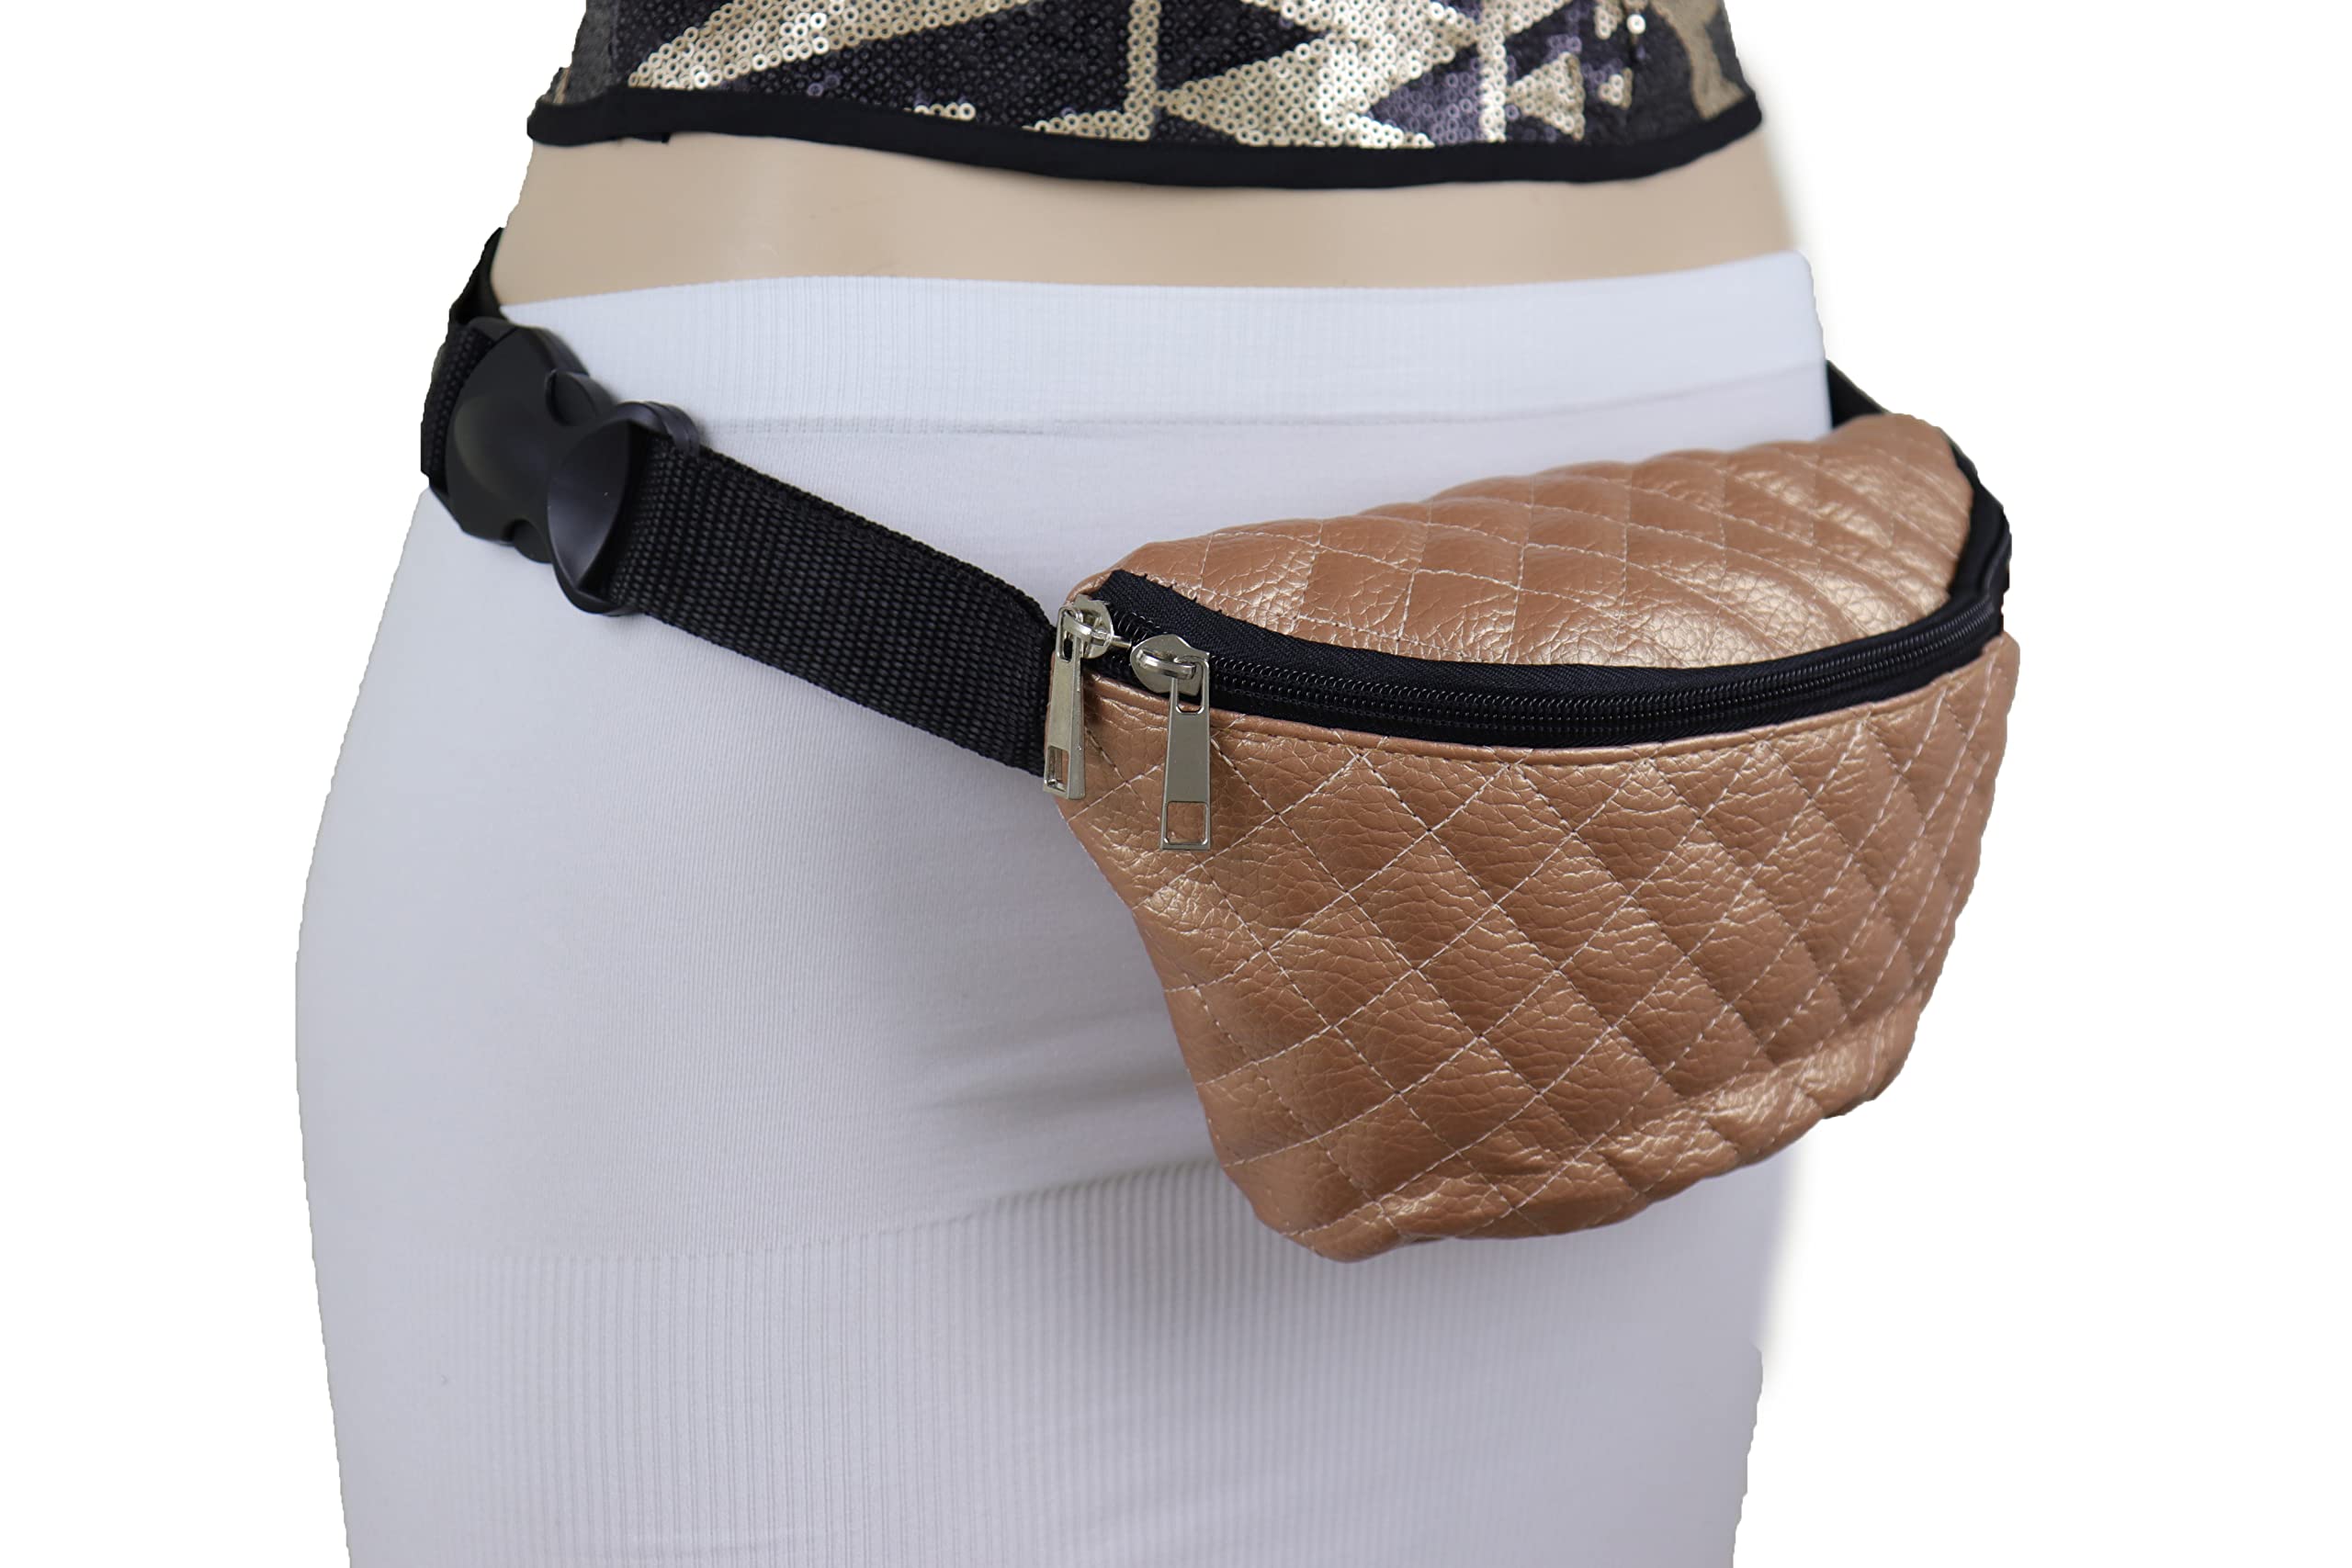 Women Rust Gold Strap Belt Fanny Pack Fashion Belt Bum Bag Cross Body Travel Vacation Size S M